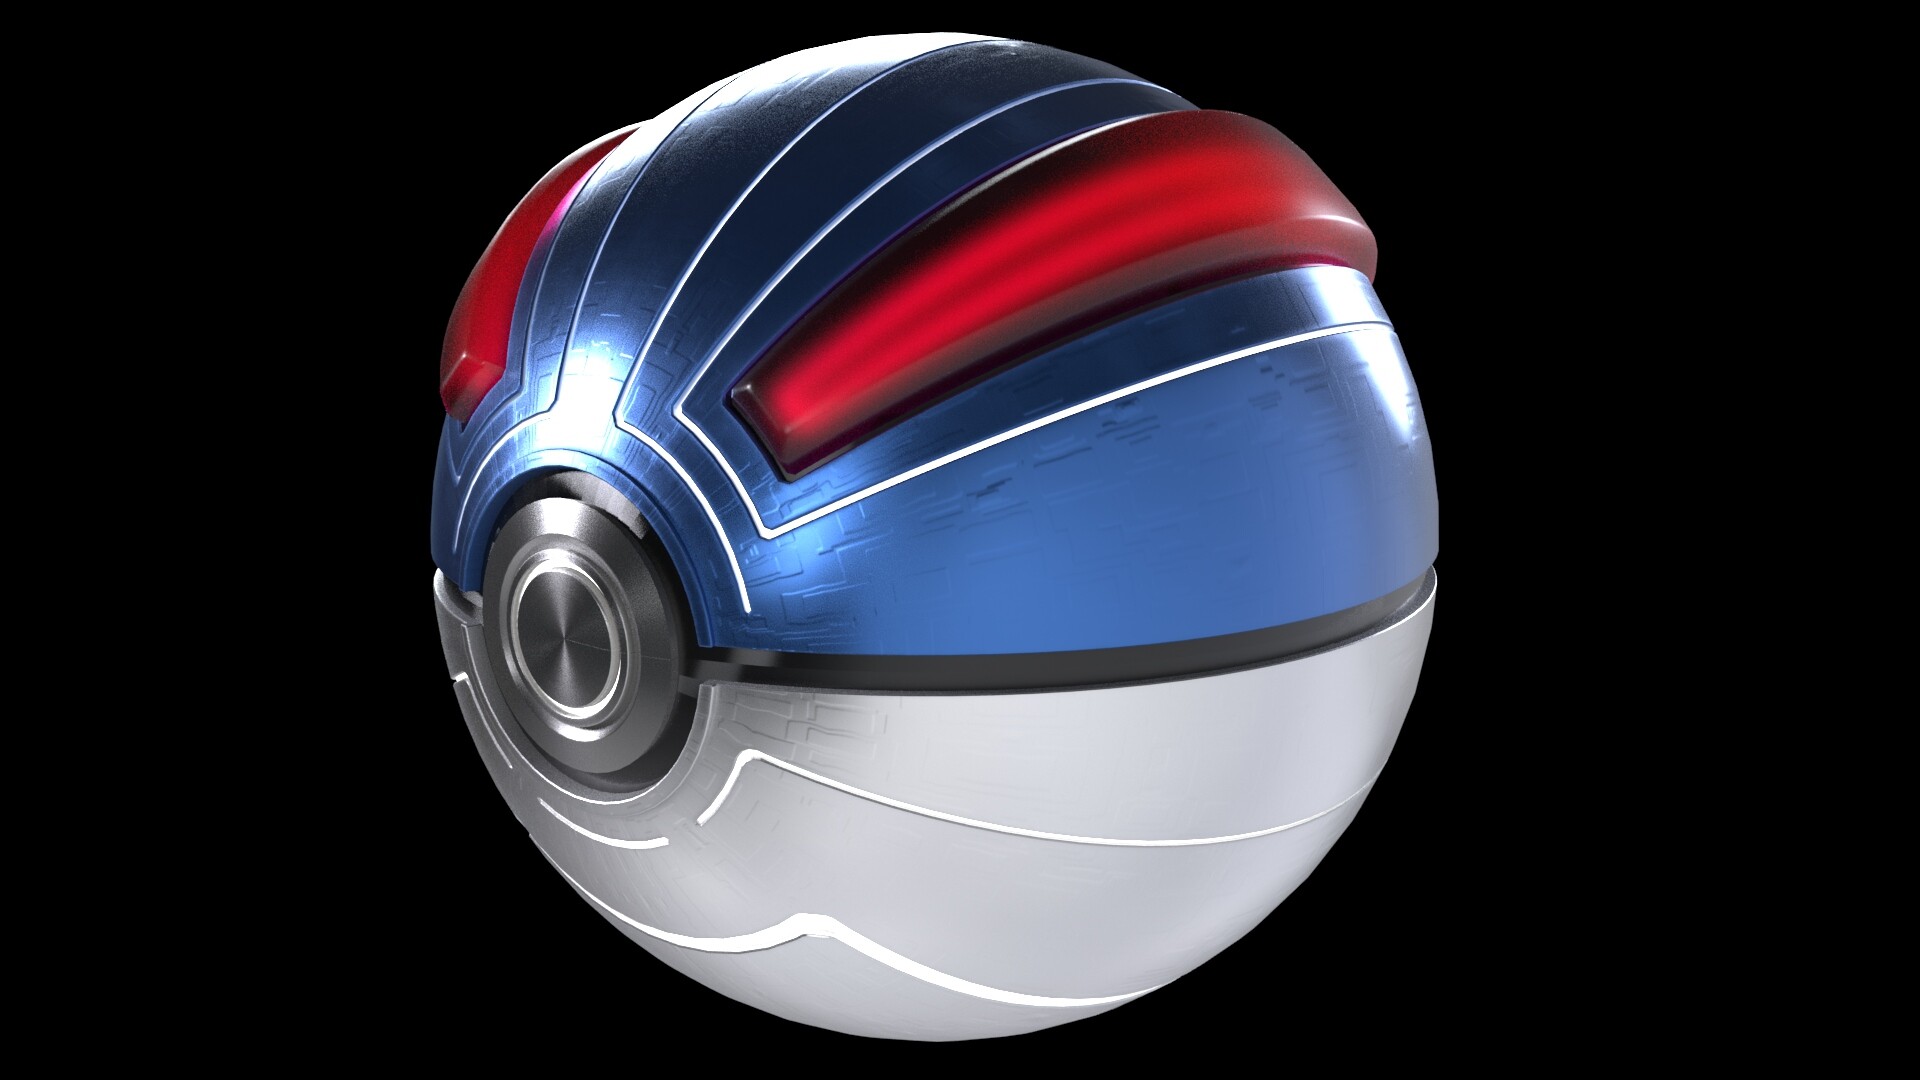 ArtStation - 3D Pokémon Poke ball